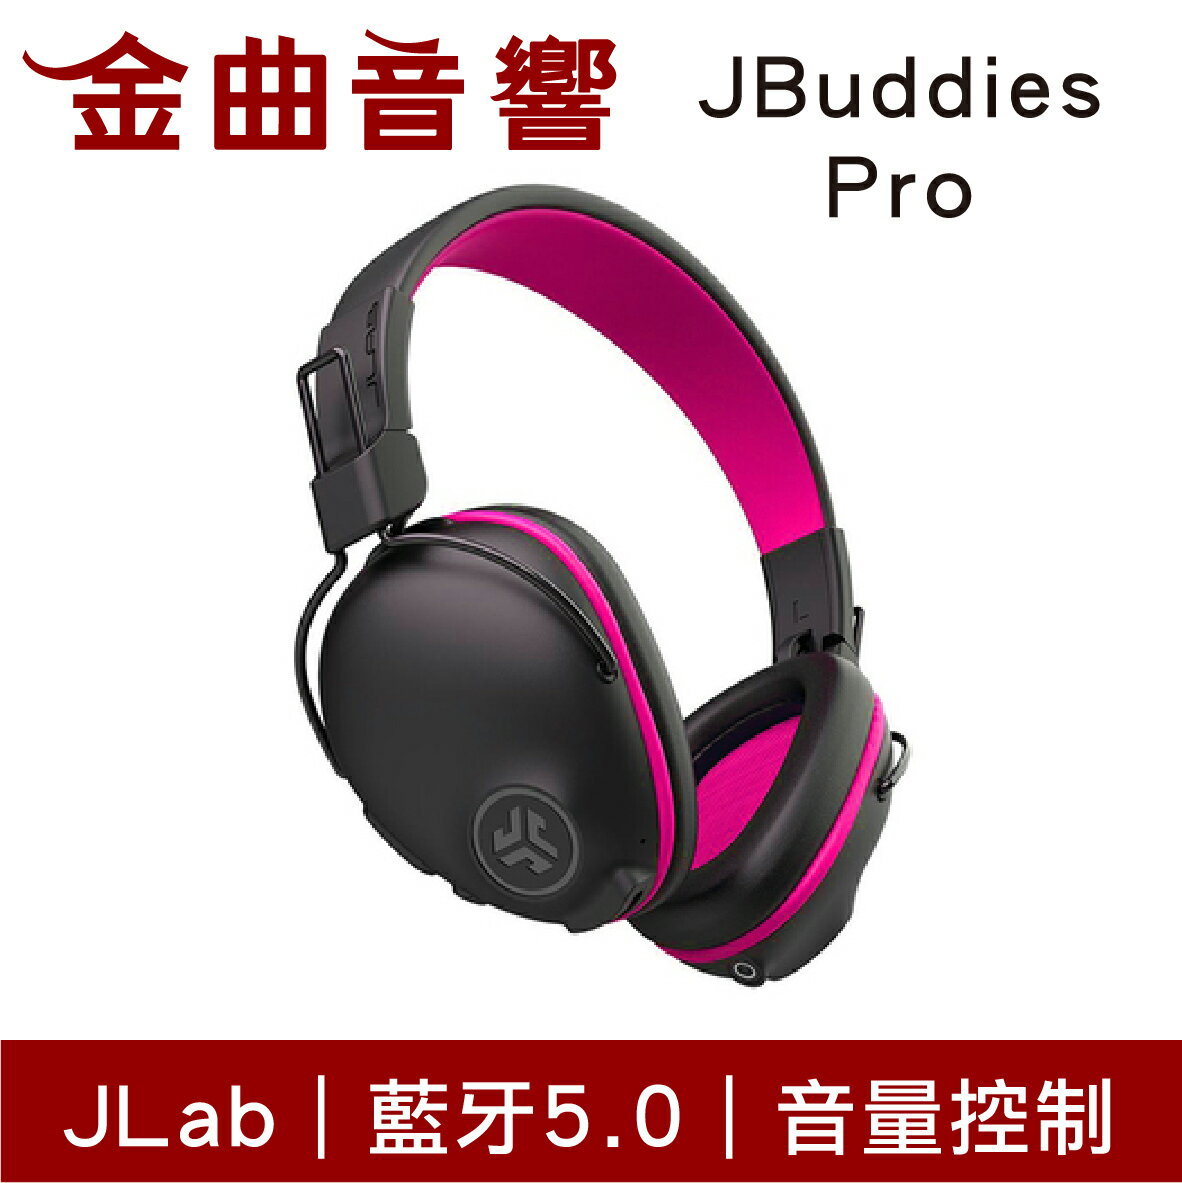 JLAB JBuddies Pro 粉色 音量控制 麥克風 40mm驅動 兒童 青少年 藍牙 耳罩式 耳機 | 金曲音響